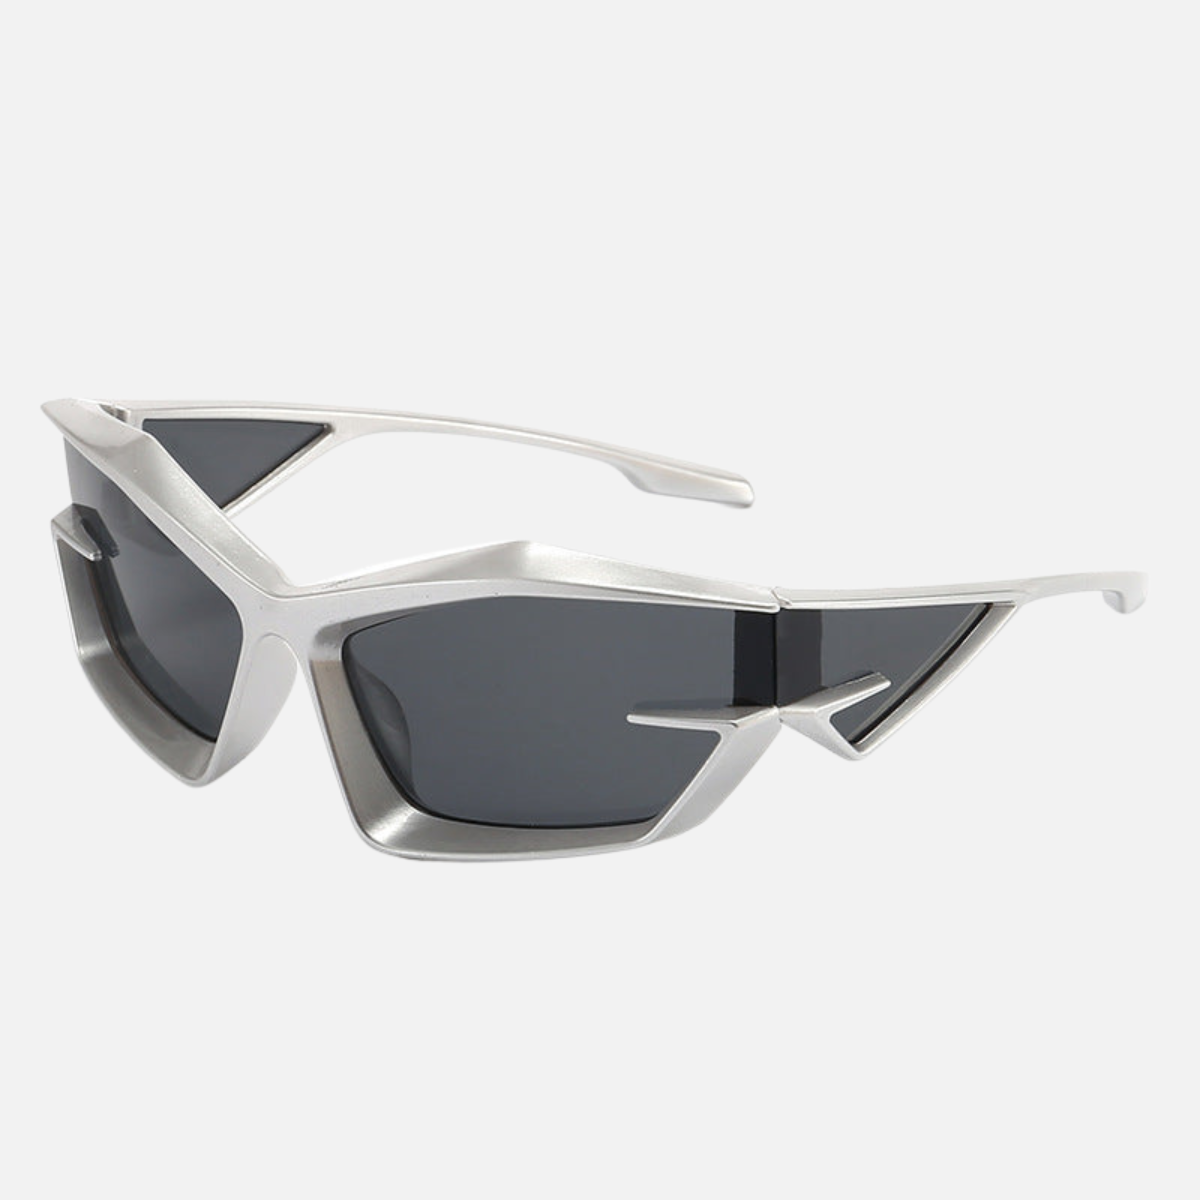 Ethereal Catwalk Sunglasses